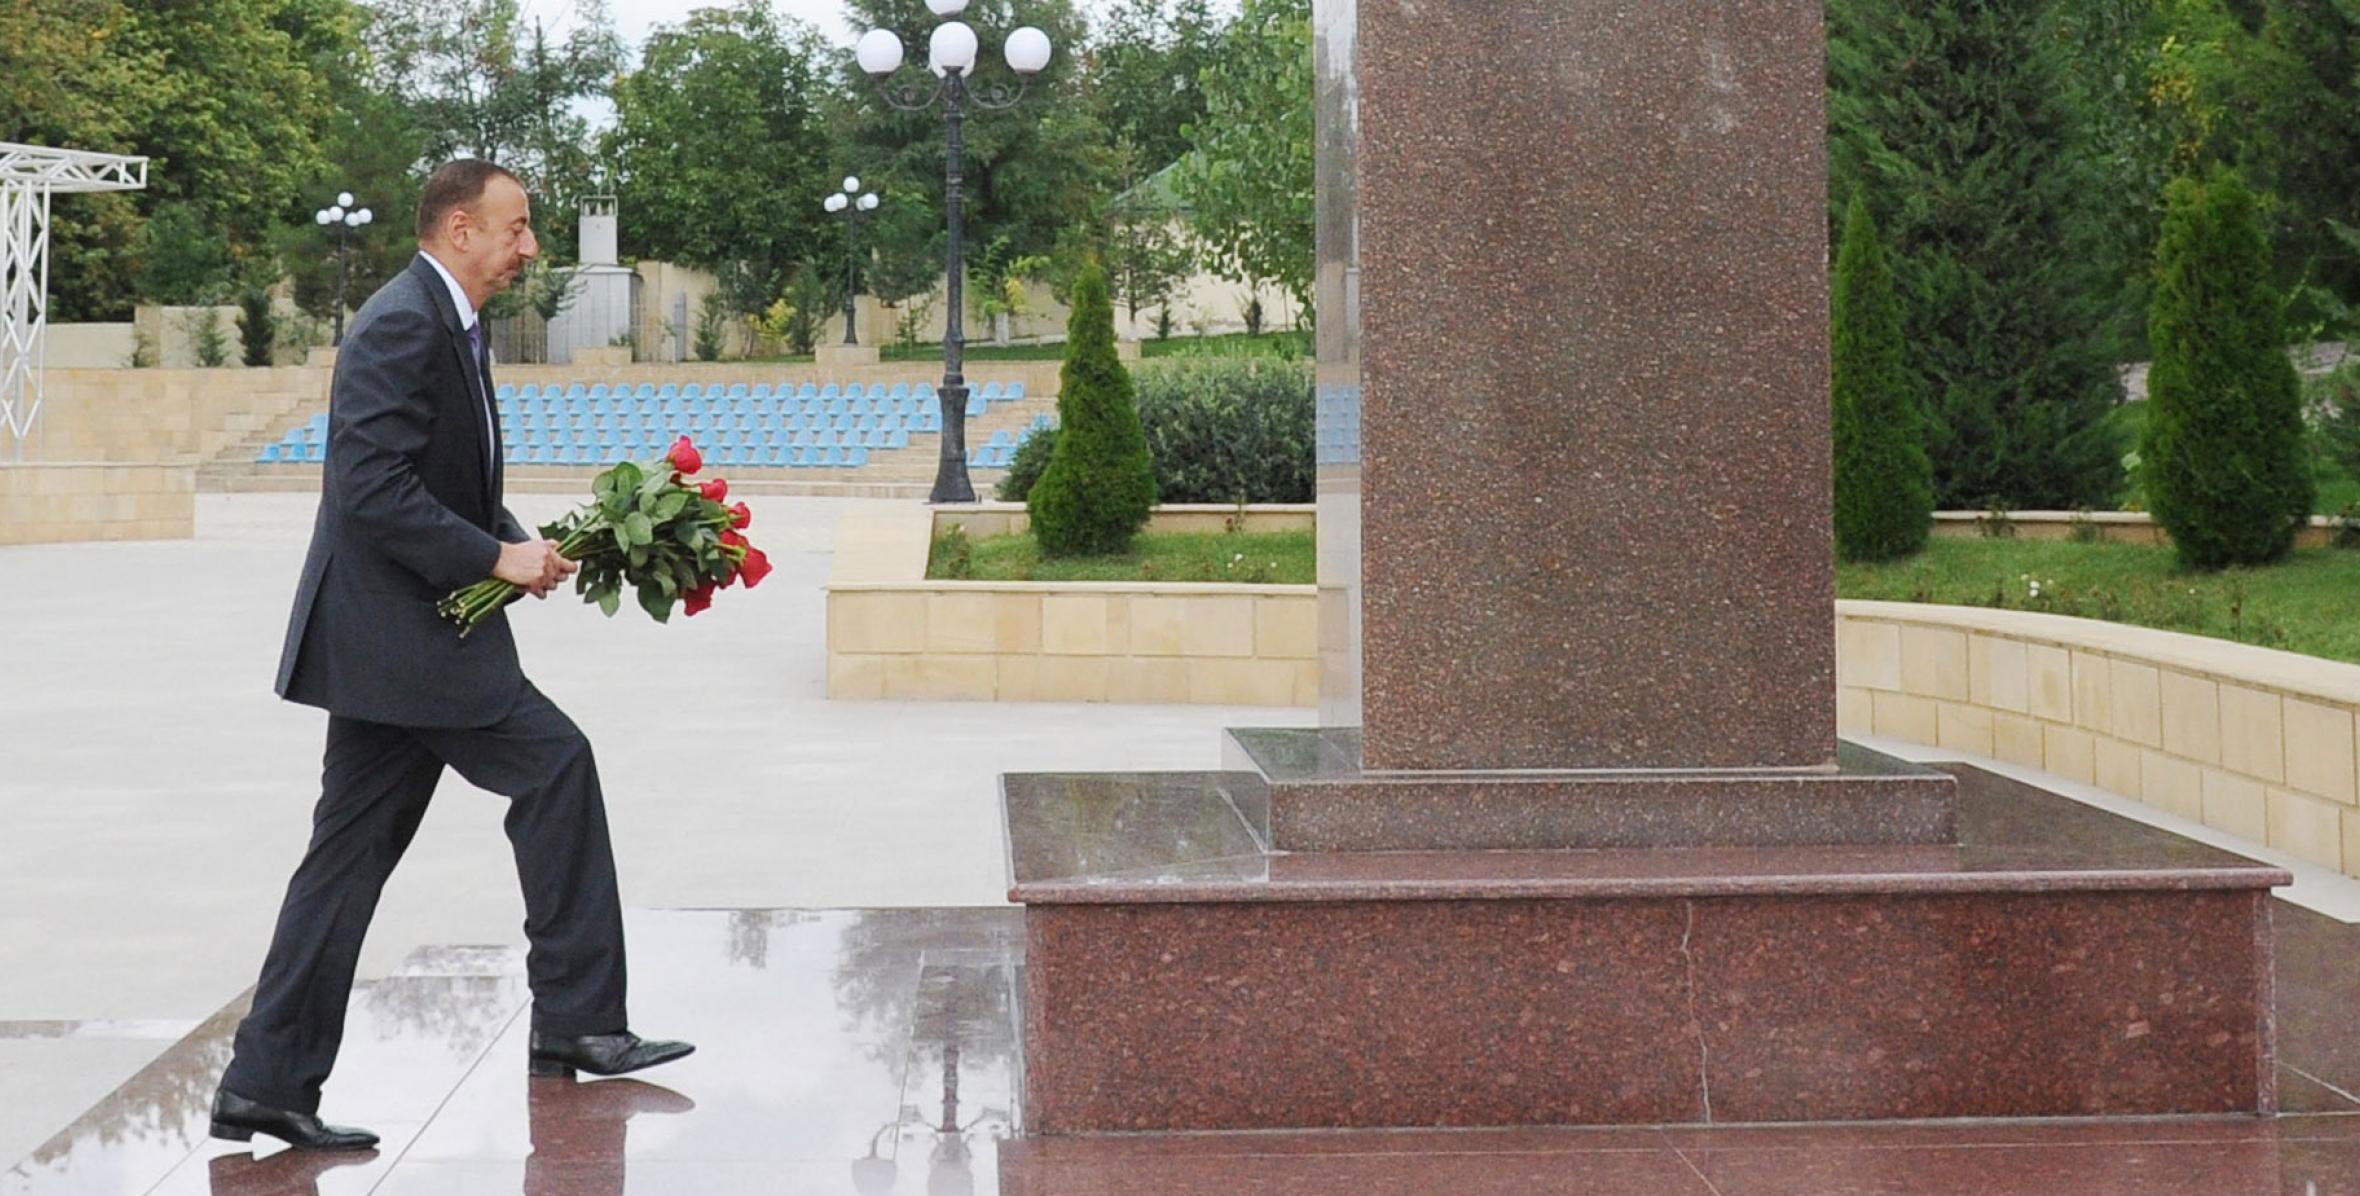 Ilham Aliyev visited a statue of nationwide leader Heydar Aliyev in Shamakhi